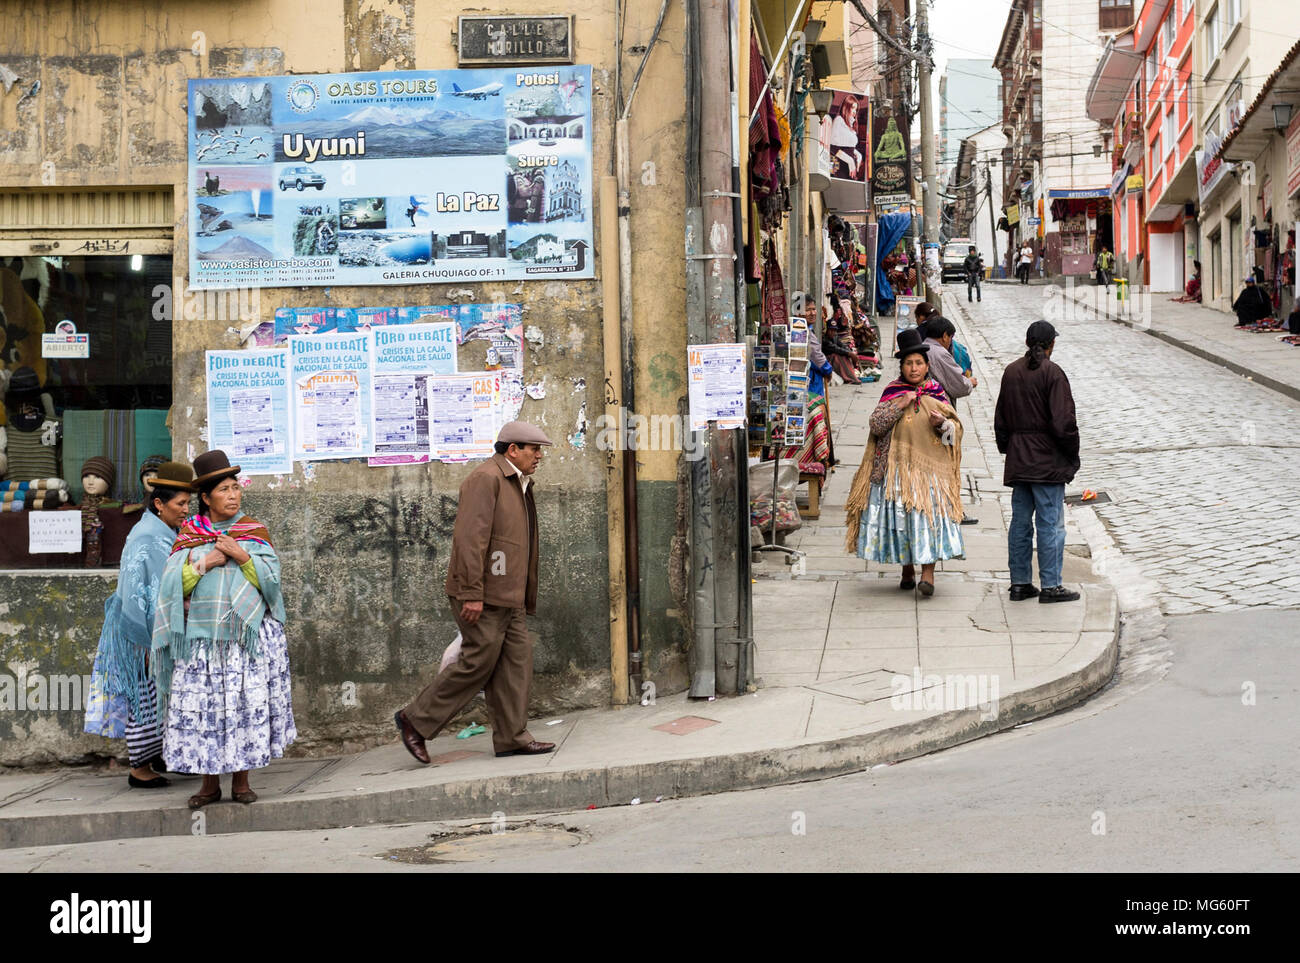 La Paz, Bolivia - December 11, 2011: Bolivians in a Neighborhood. Stock Photo